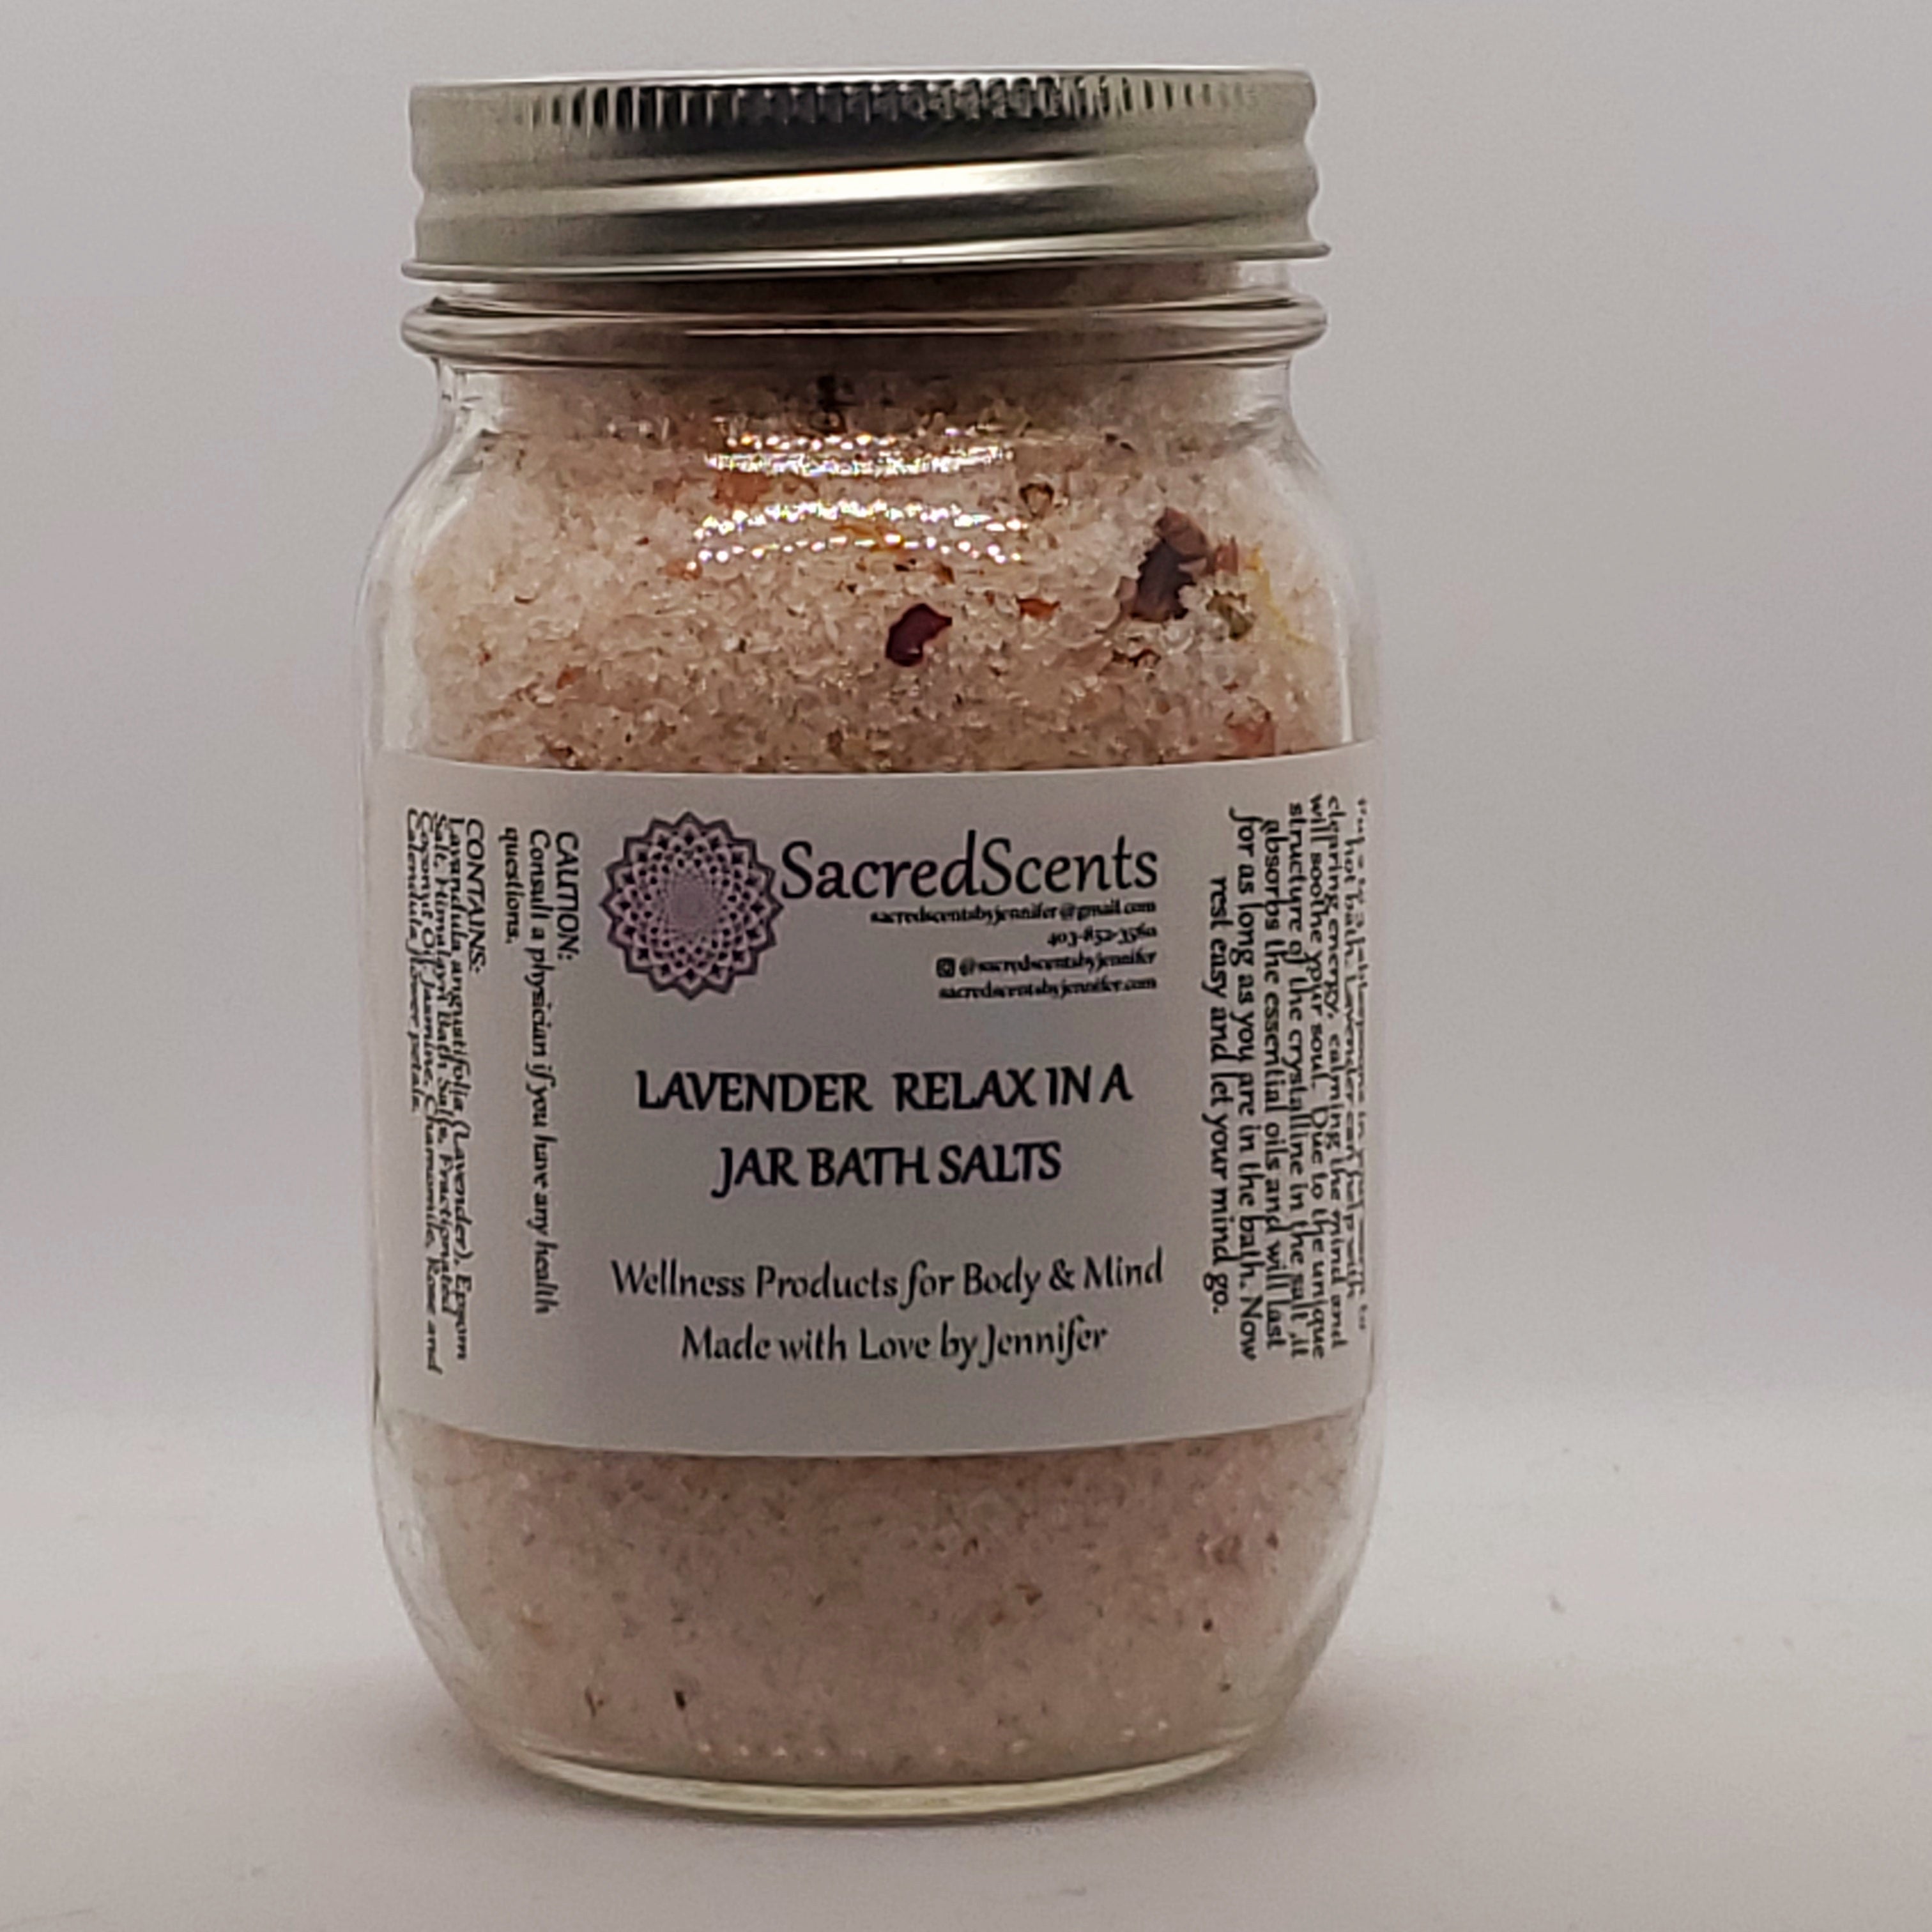 Lavender Relax in a Jar Bath Salts